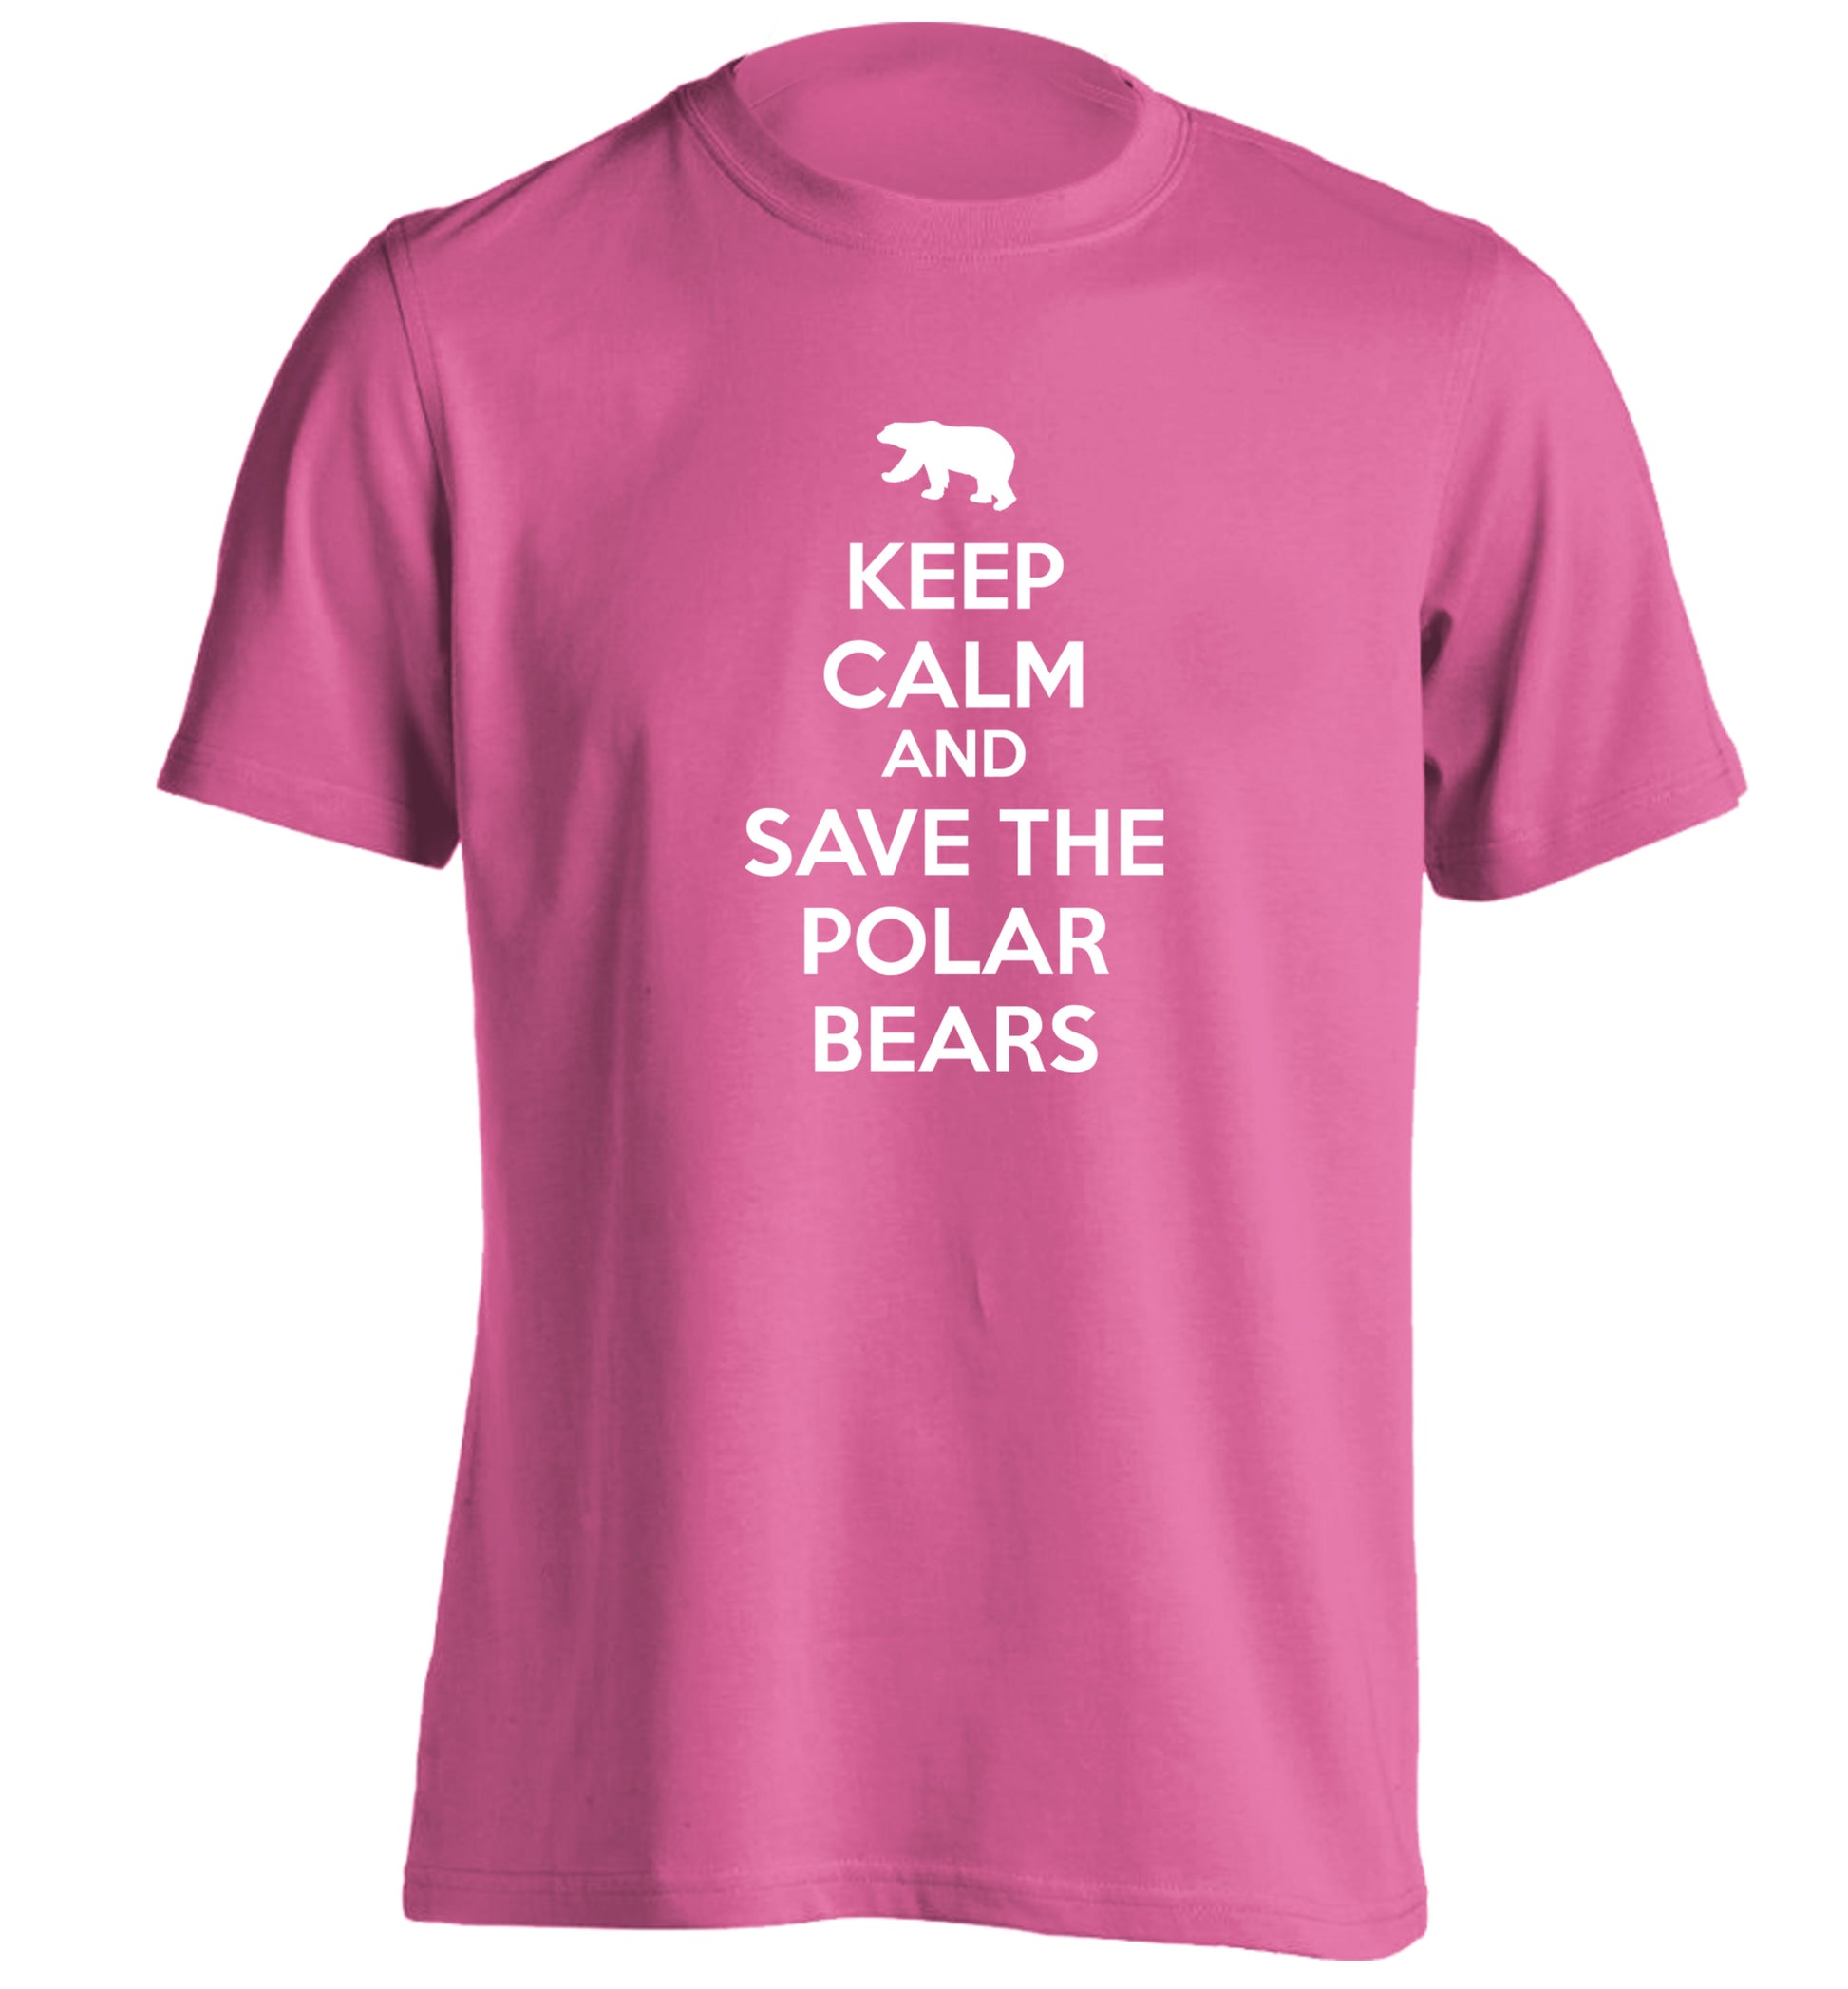 Keep calm and save the polar bears adults unisex pink Tshirt 2XL